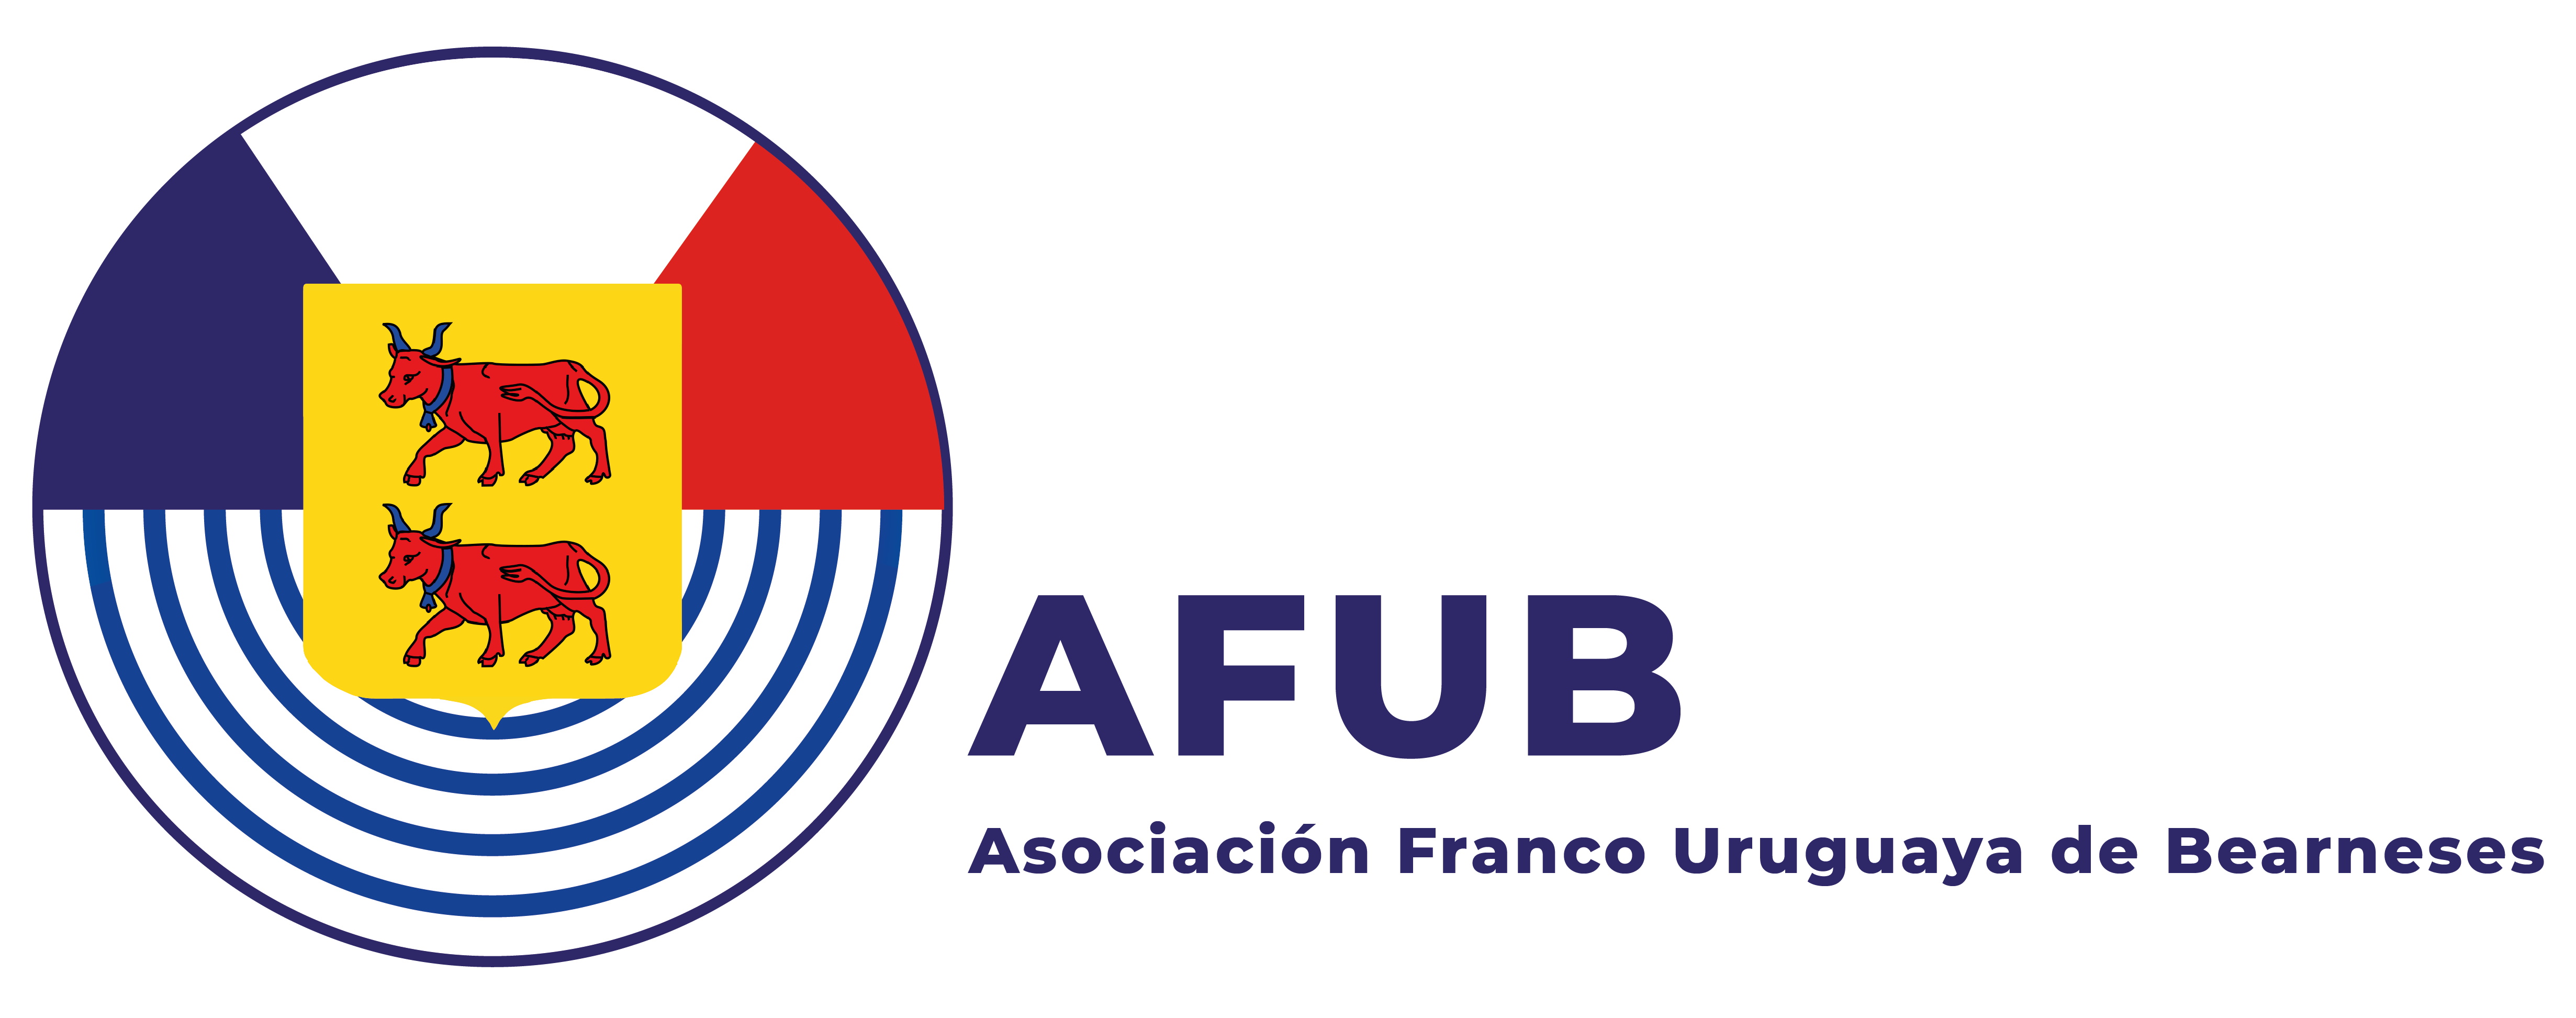 Asociación Franco Uruguaya de Bearneses